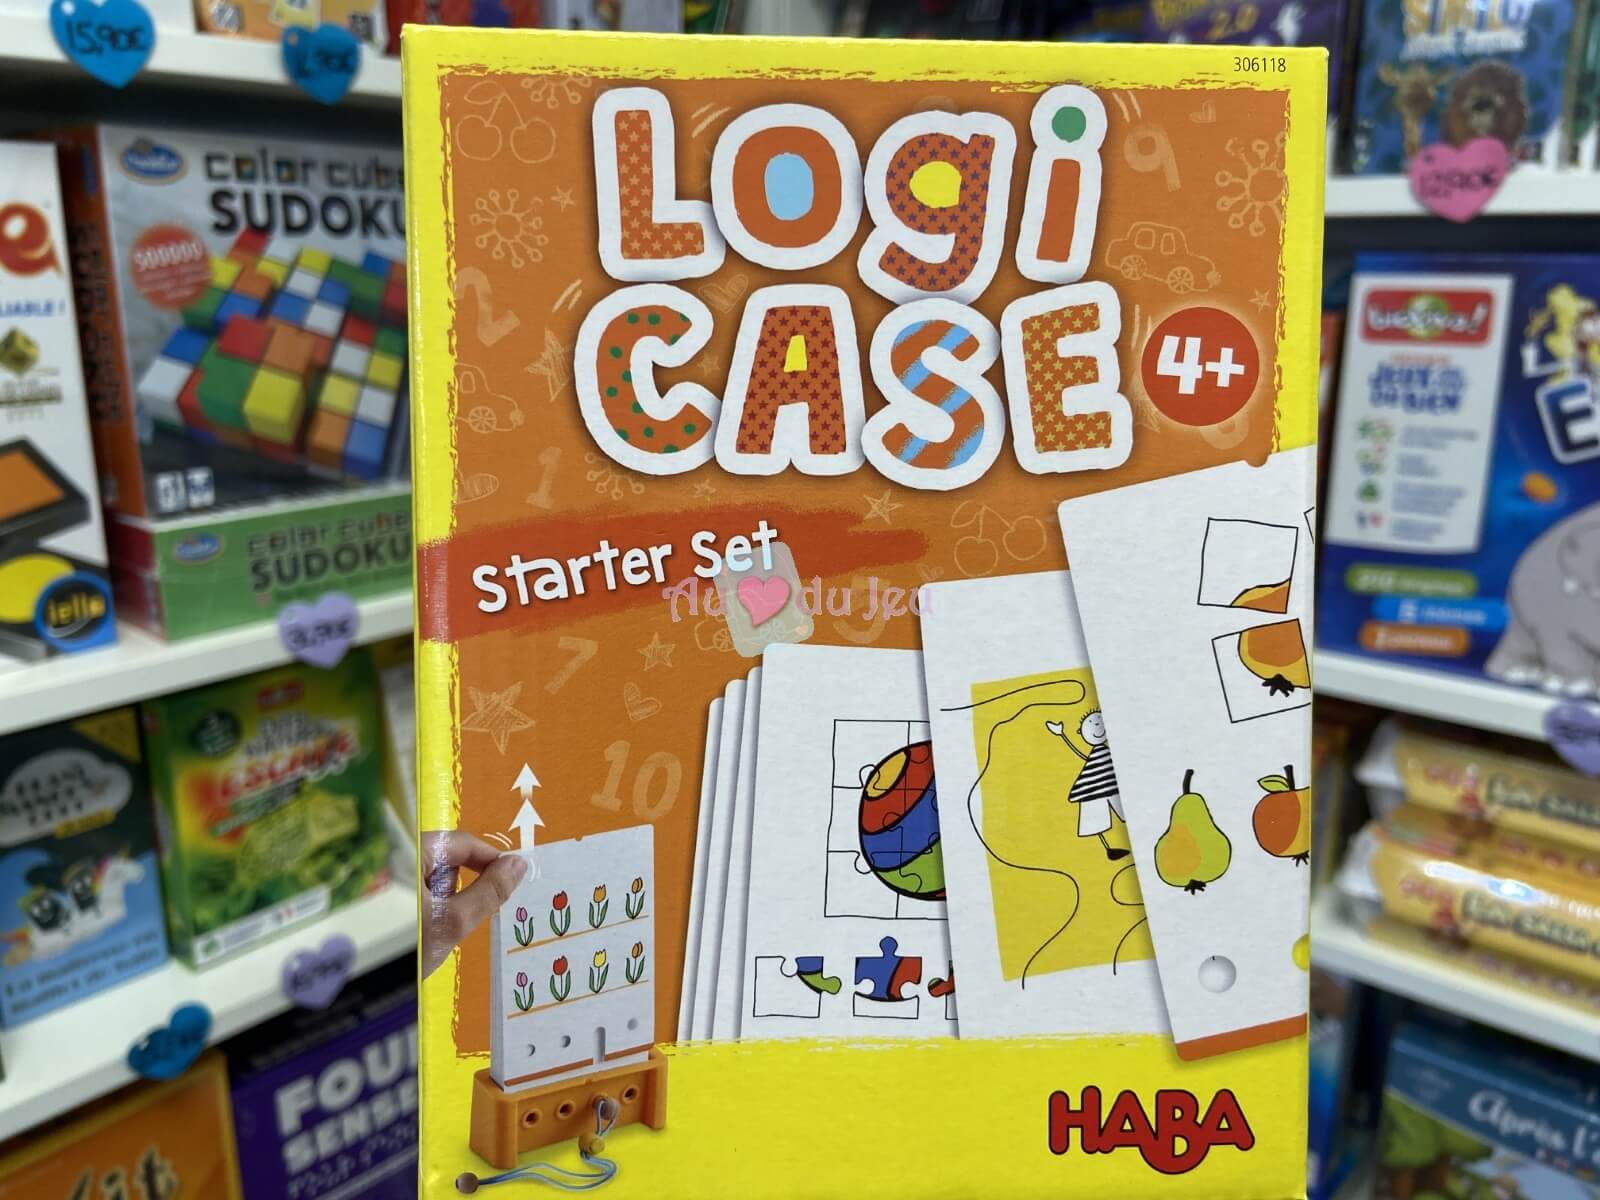 Logi Case Starter Set 4+ Haba